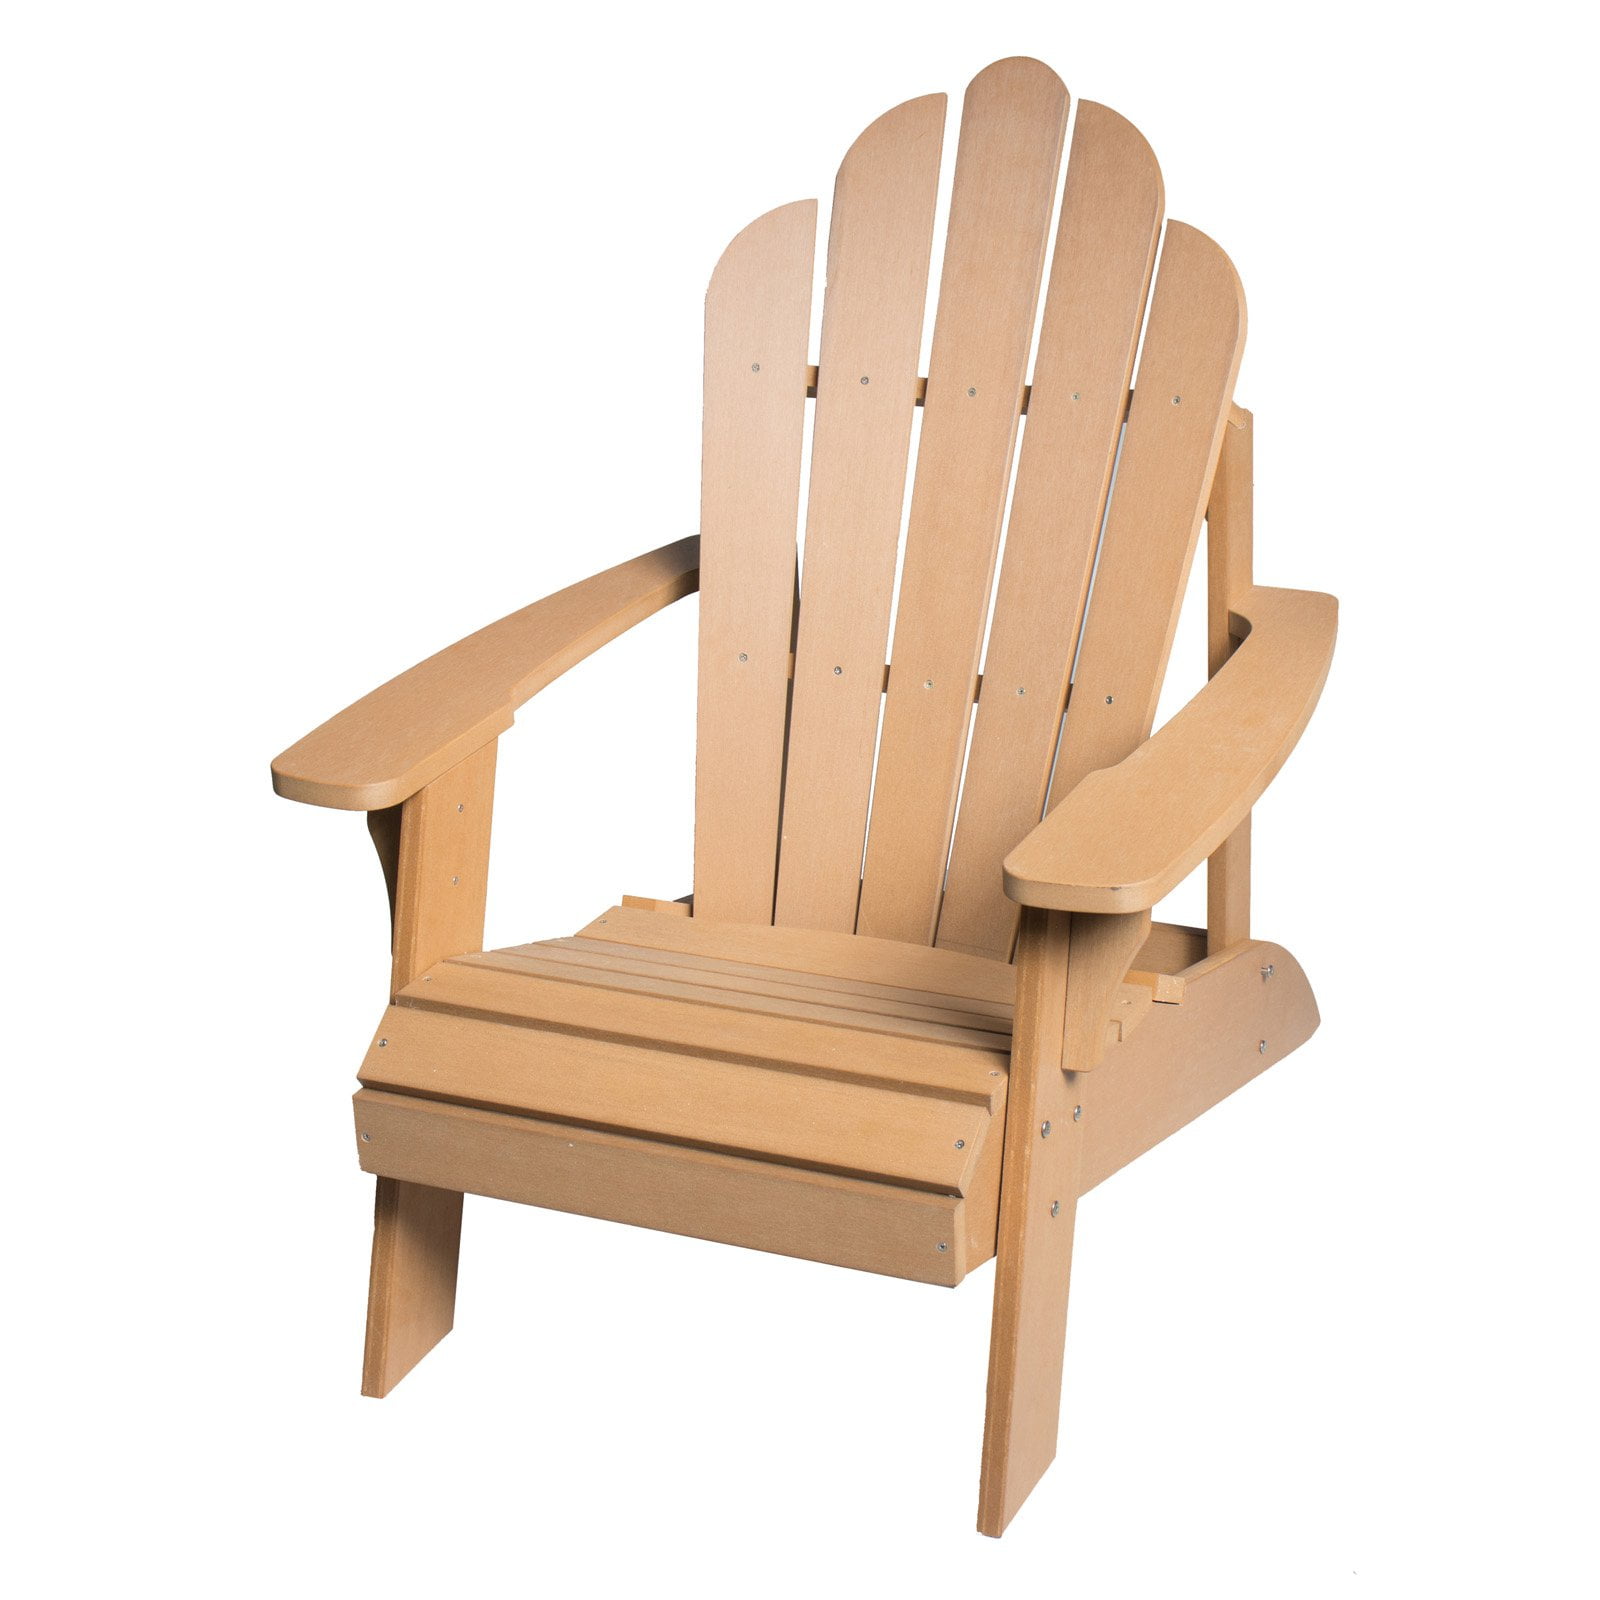 Composite Wood Outdoor Adirondack Chair - Natural Wood Color - Walmart.com